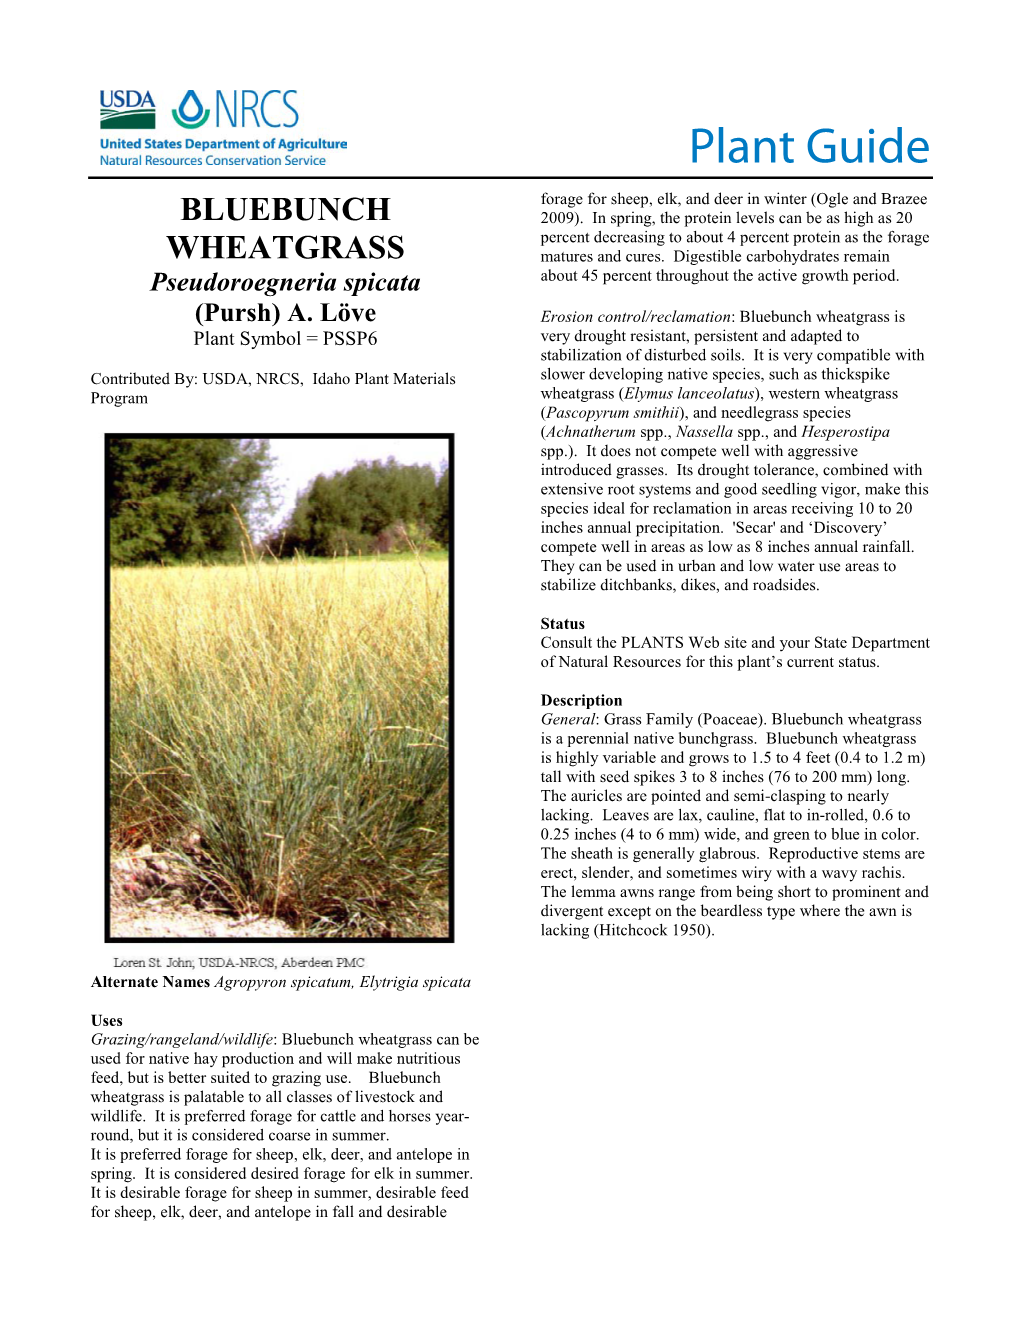 Bluebunch Wheatgrass (Pseudoroegneria Spicata) Plant